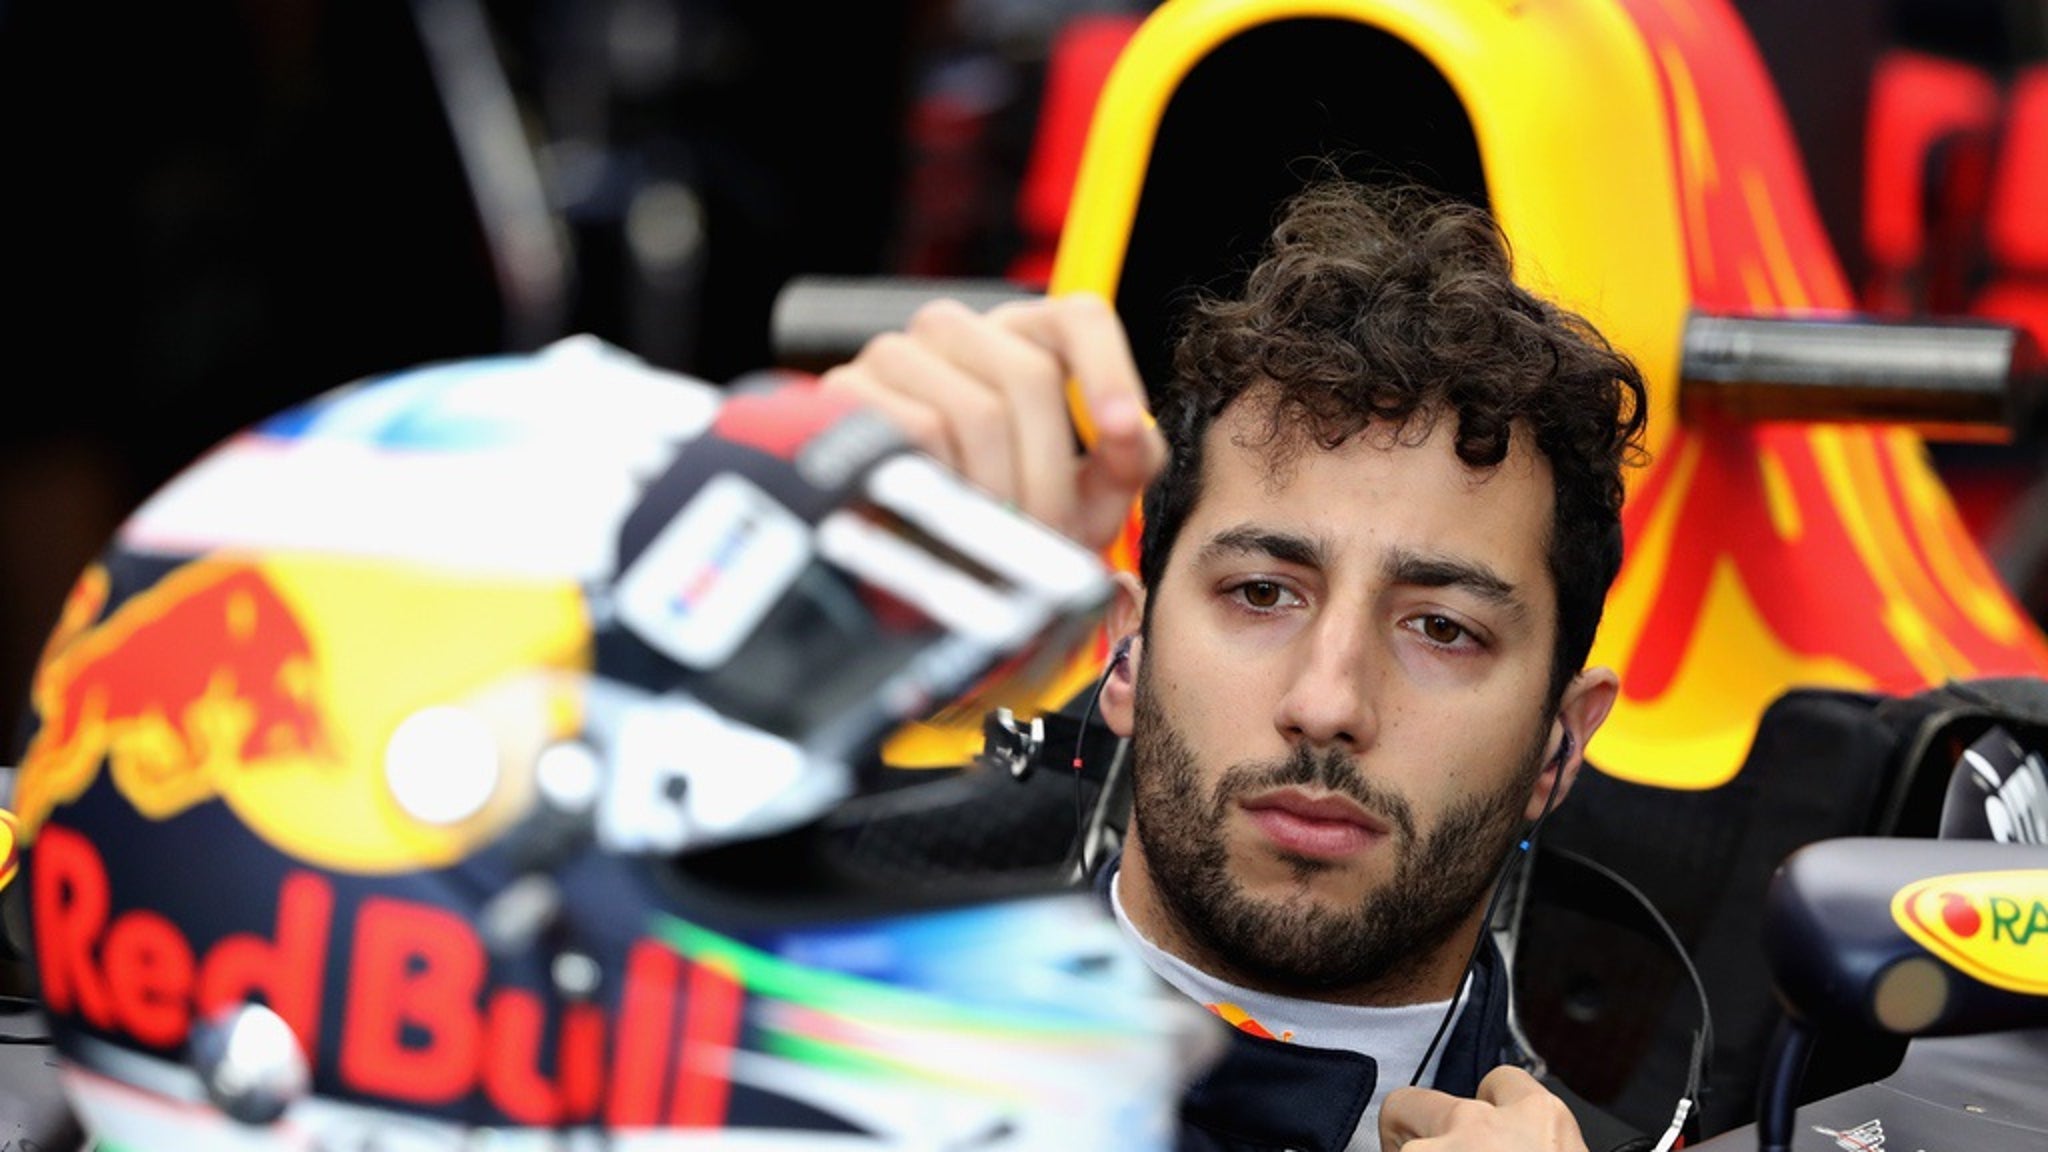 Daniel Ricciardo On The Track